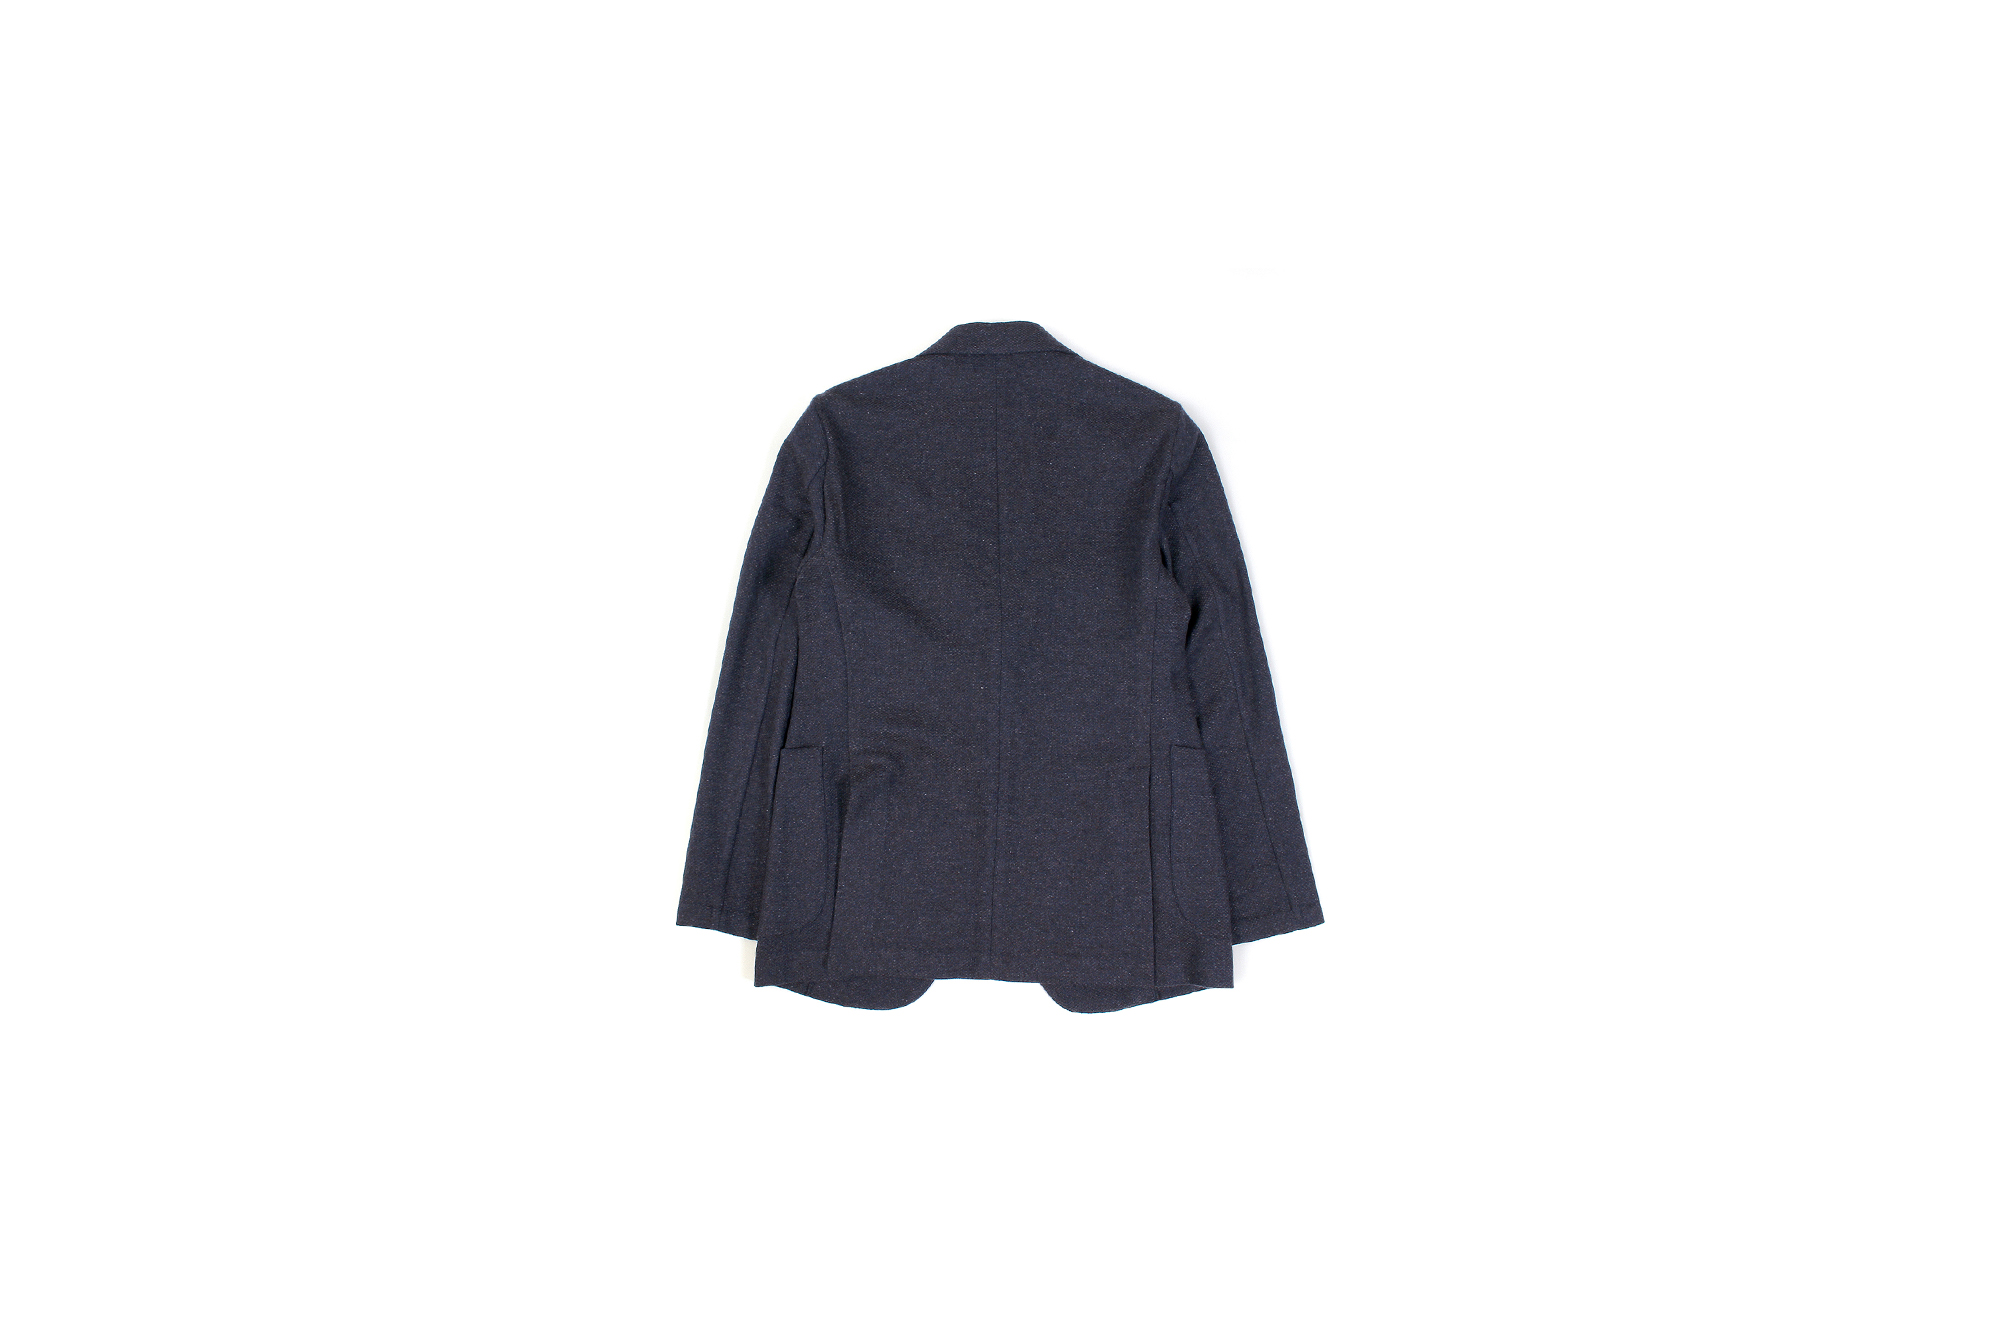 Finjack (フィンジャック) Vintage Cashmere 2B Jacket ヌーヴォラライン ヴィンテージ カシミヤ ジャケット